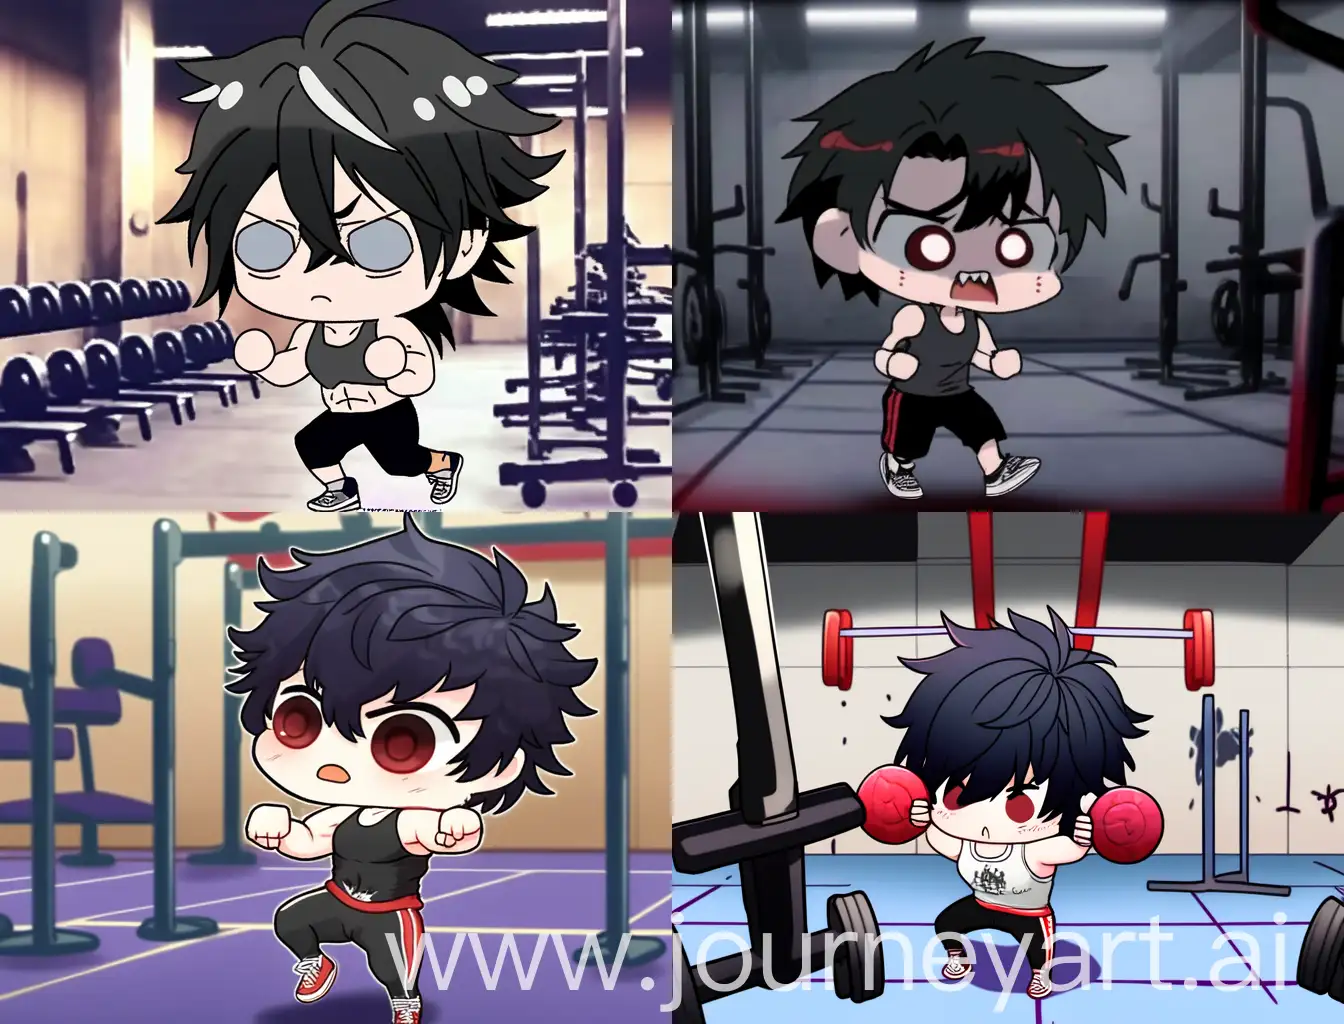 Chibi-Emo-Boy-Gym-Fitness-in-Horror-Setting